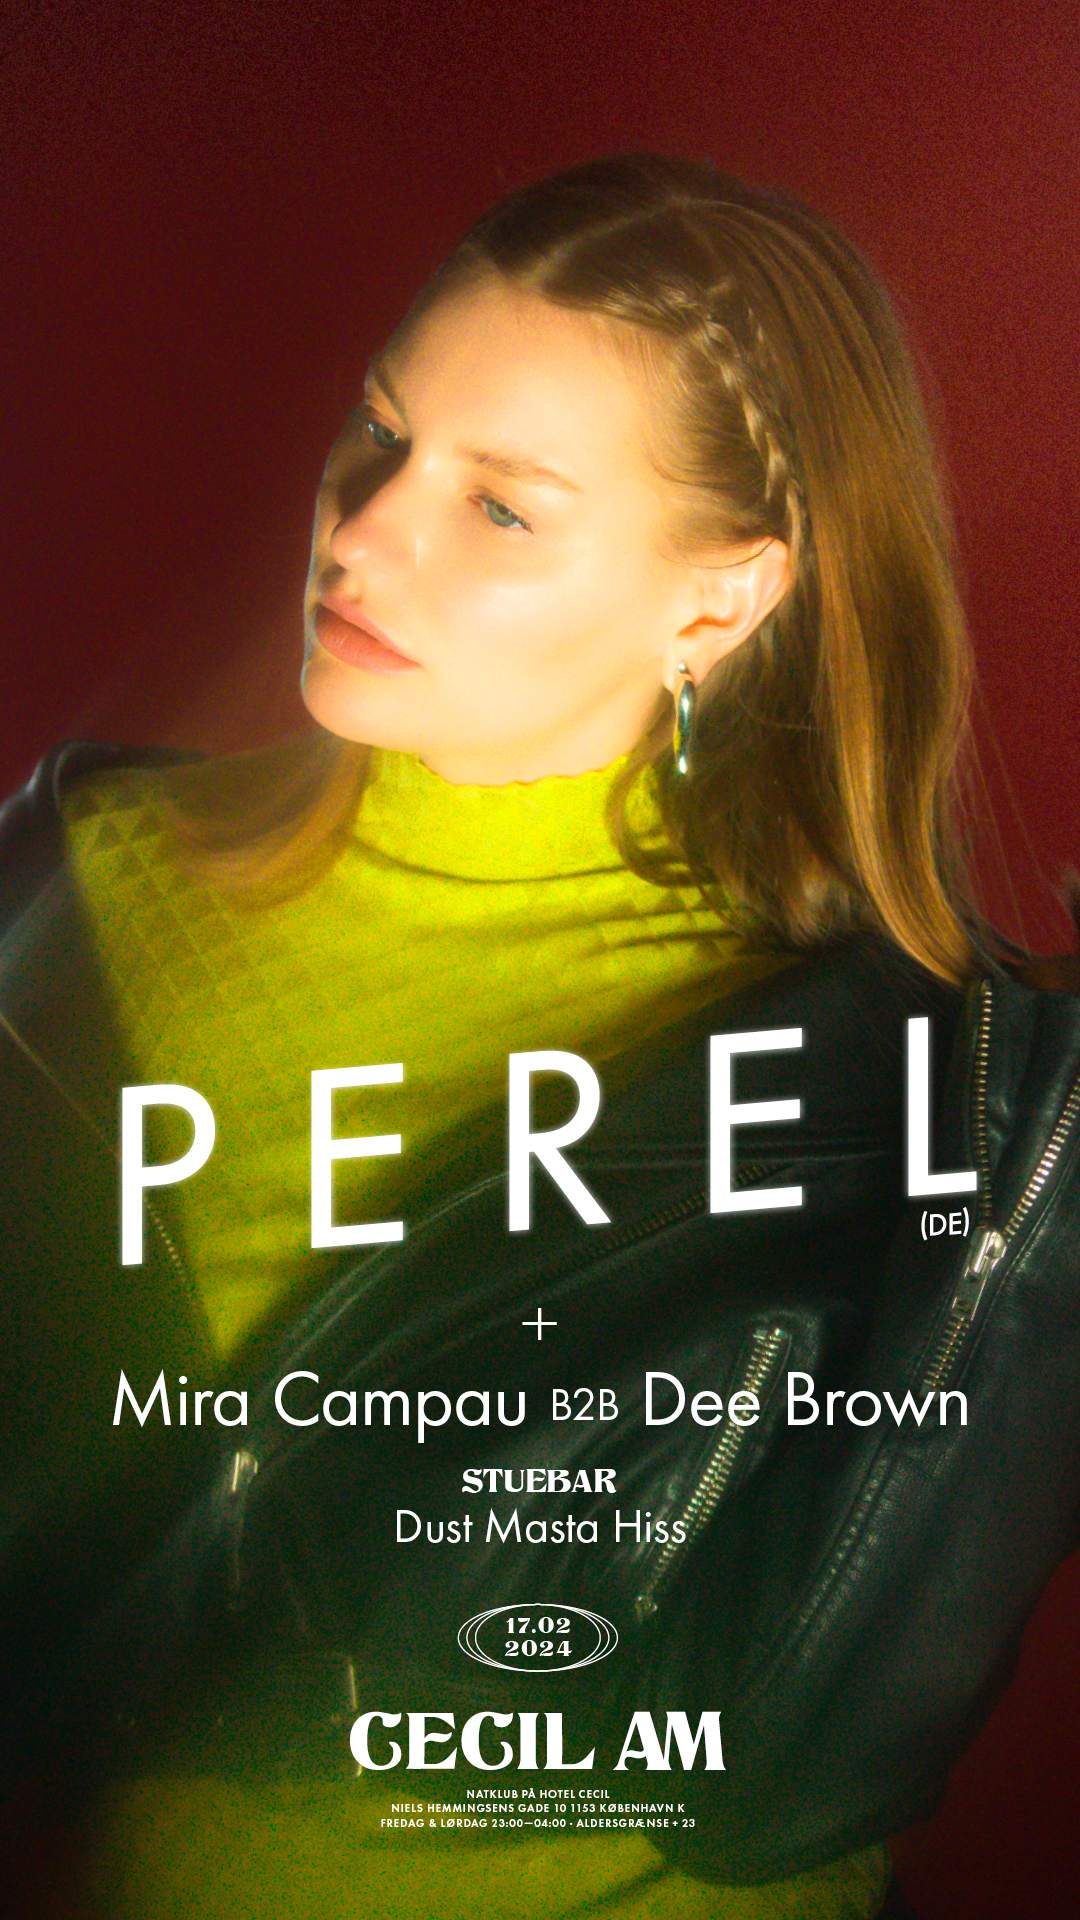 Perel (DE) + Djs Mira Campau B2B Dee Brown &Dust Masta Hiss - フライヤー表